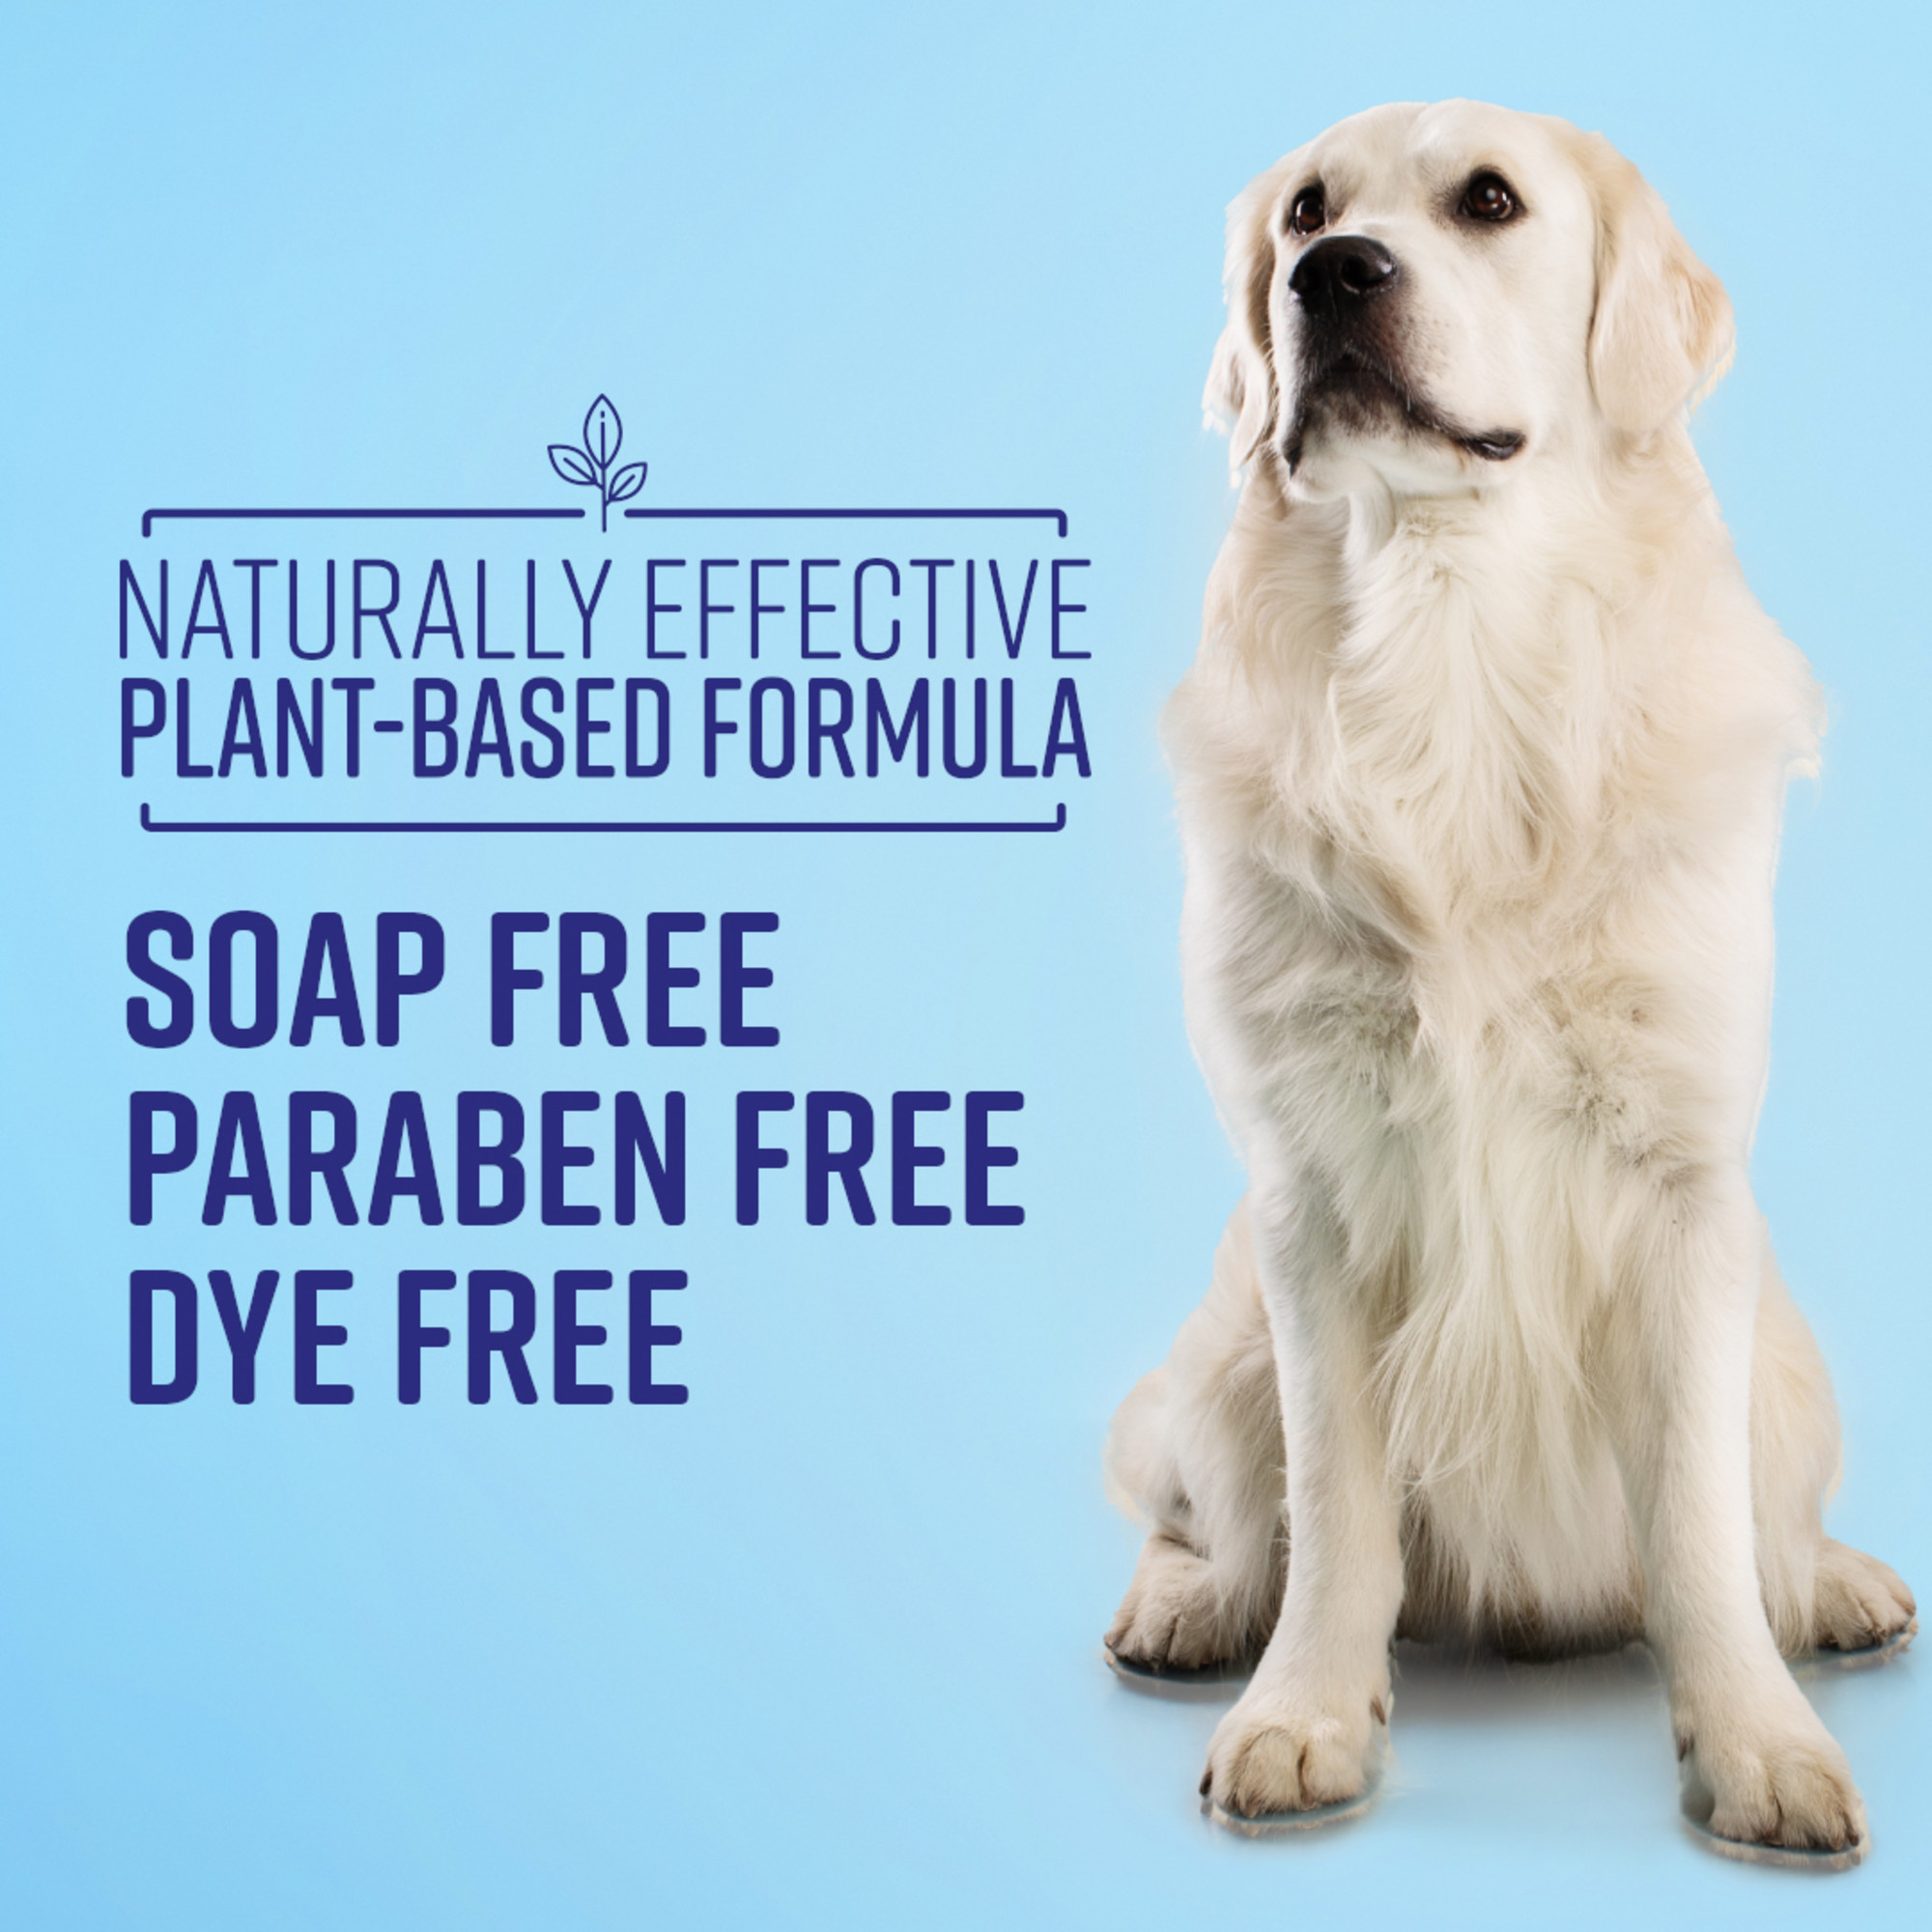 Sensitive Skin Shampoo for Pets